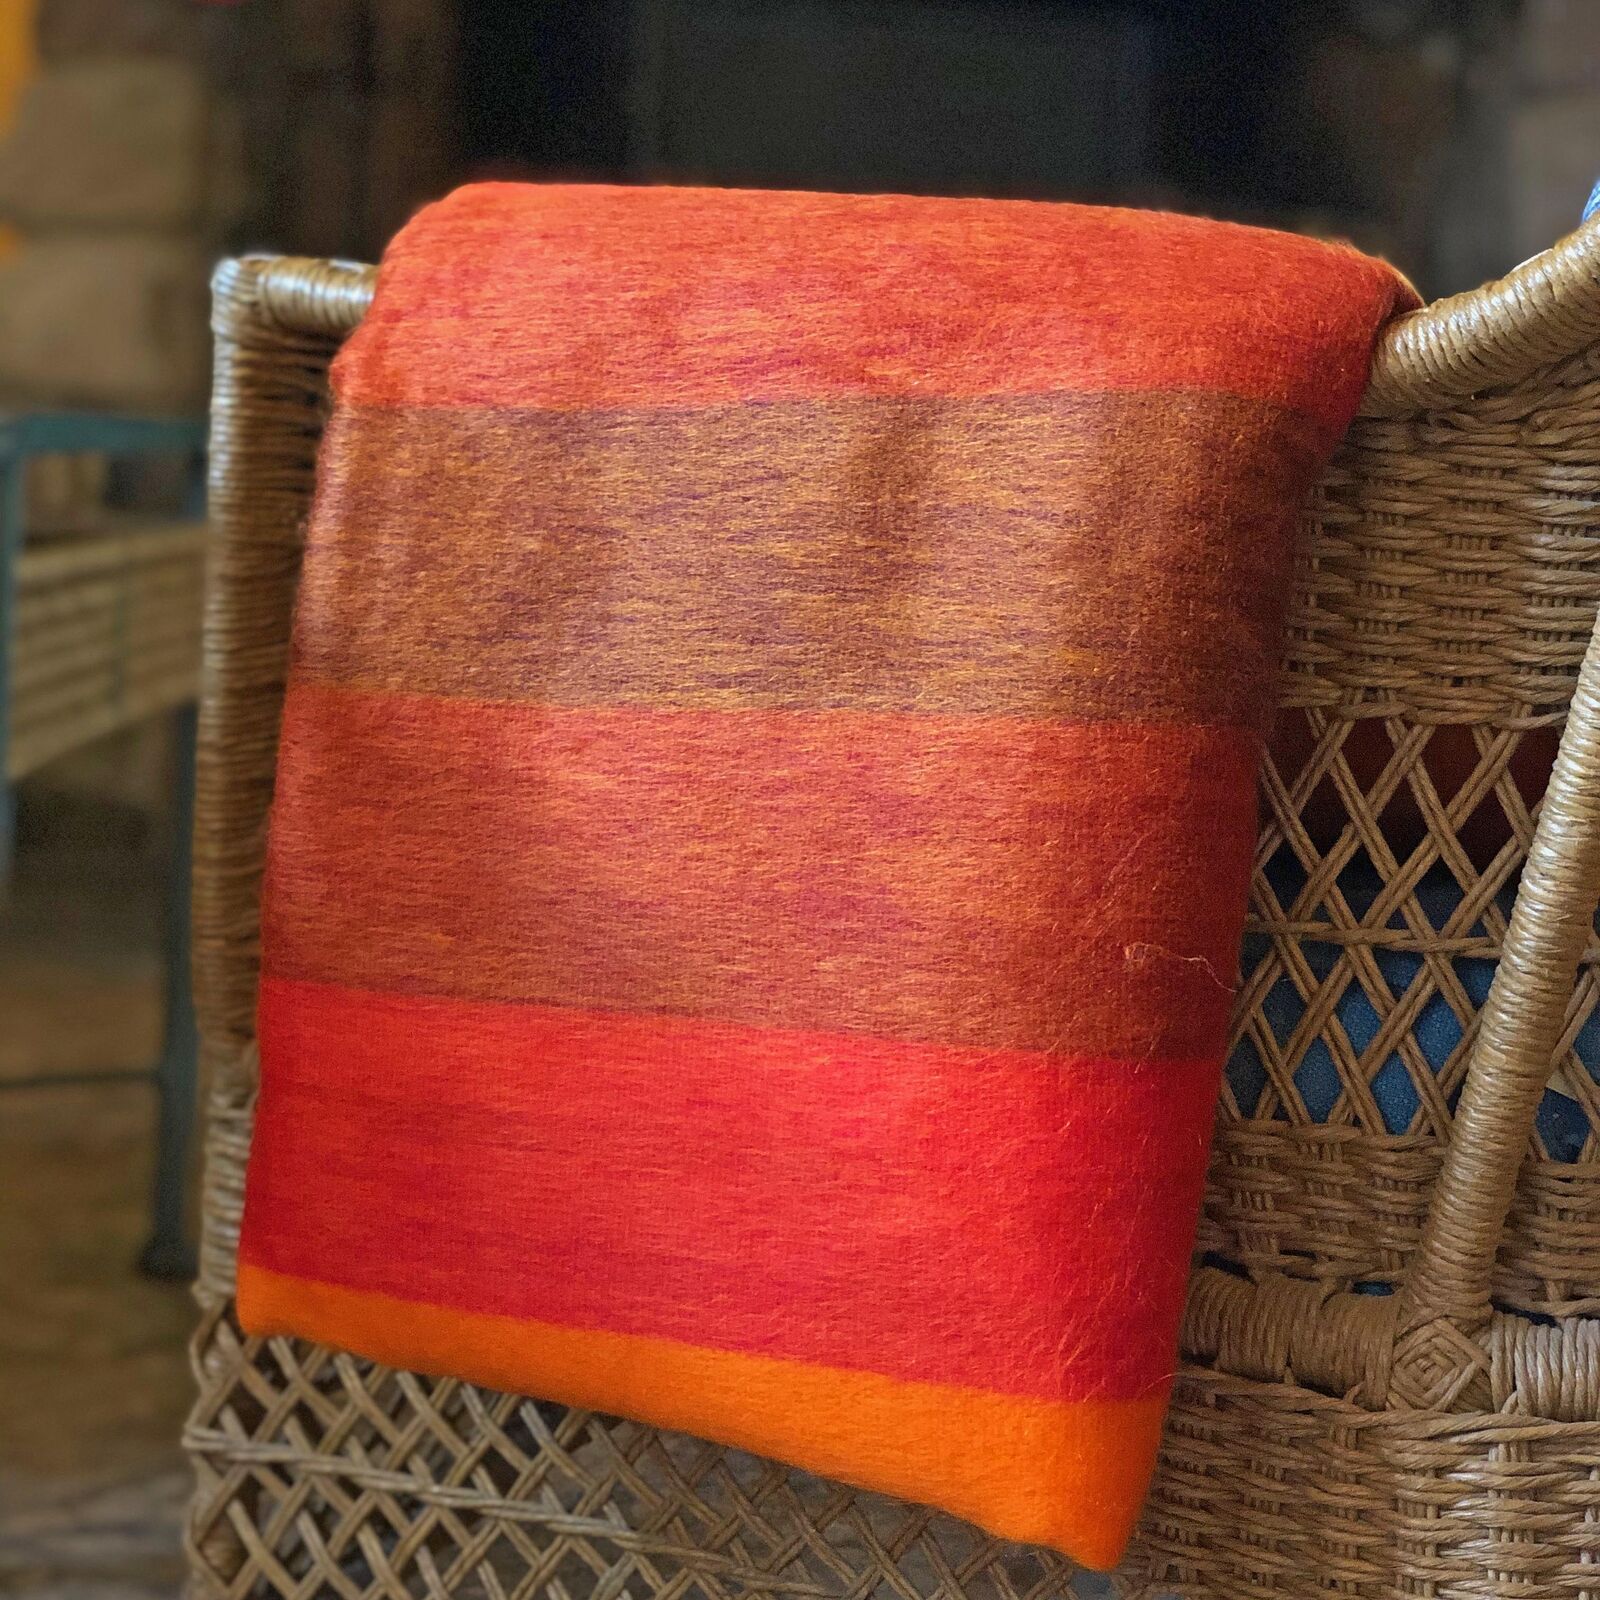 Yacupungu - Baby Alpaca Wool Throw Blanket / Sofa Cover - Queen 90" x 65" - thick stripes pattern orange